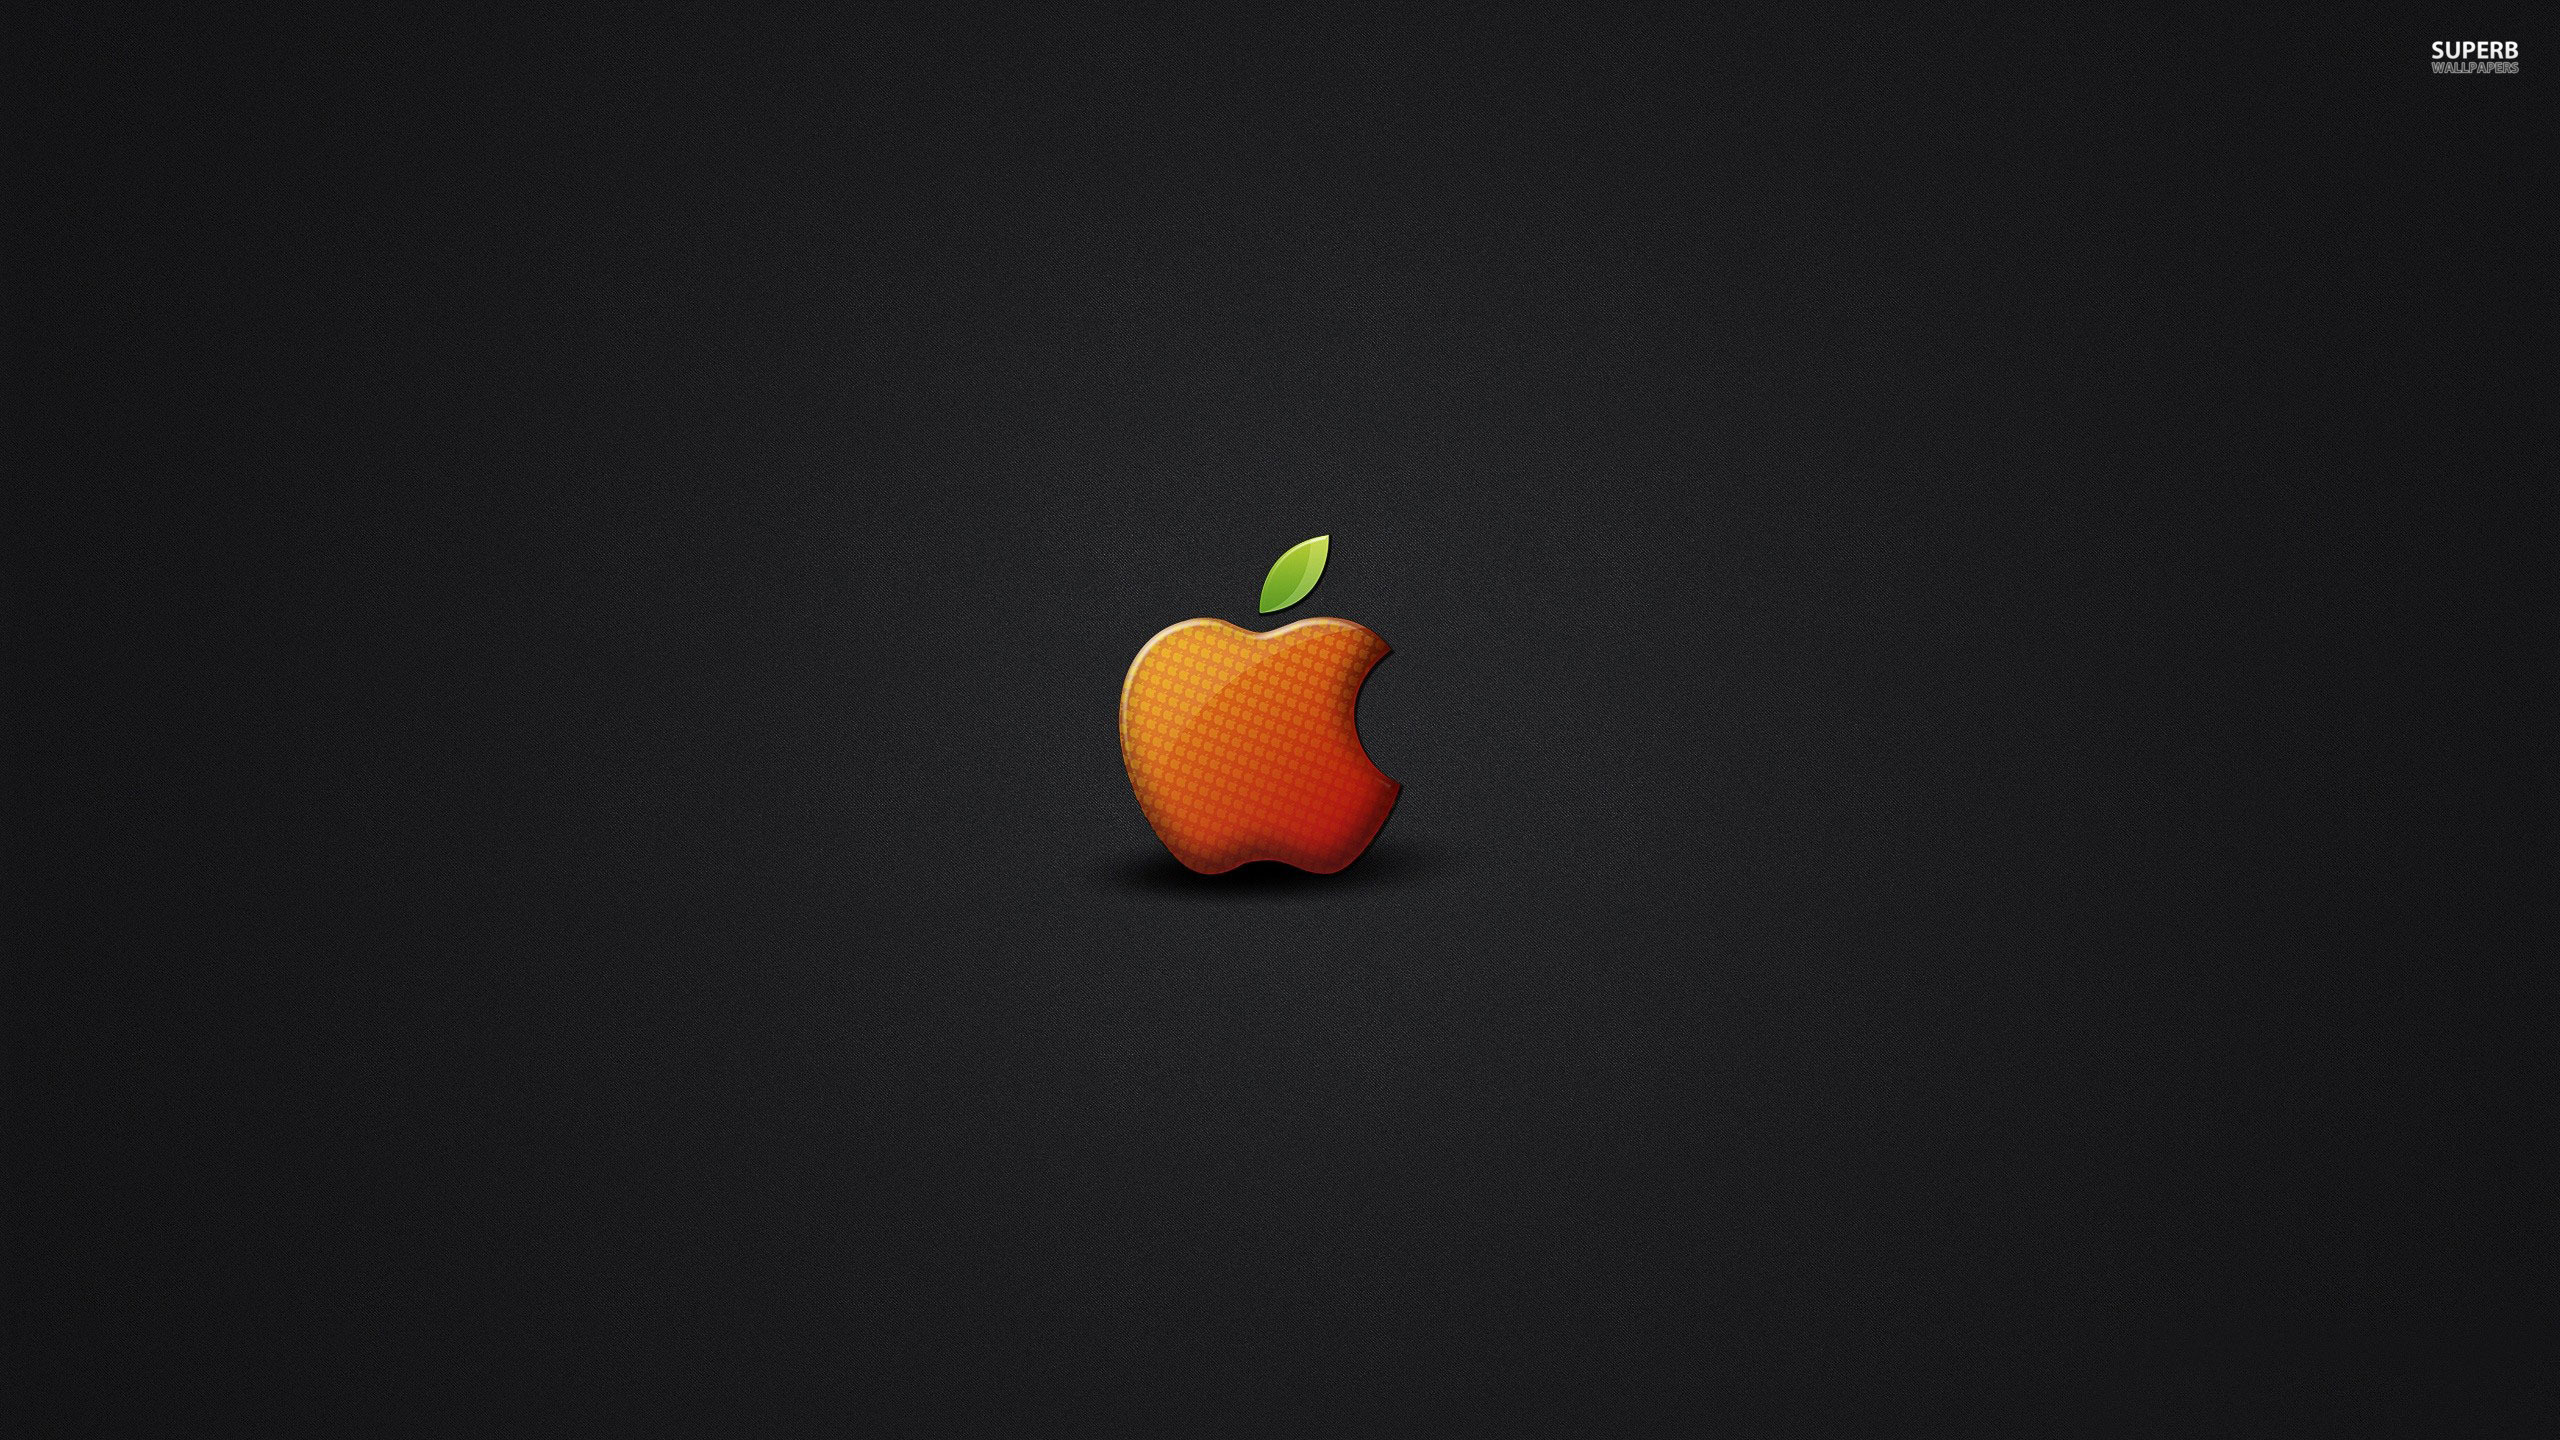 Wallpapers Apple Logo Www Superb Com 2560x1440 | #990193 #apple logo